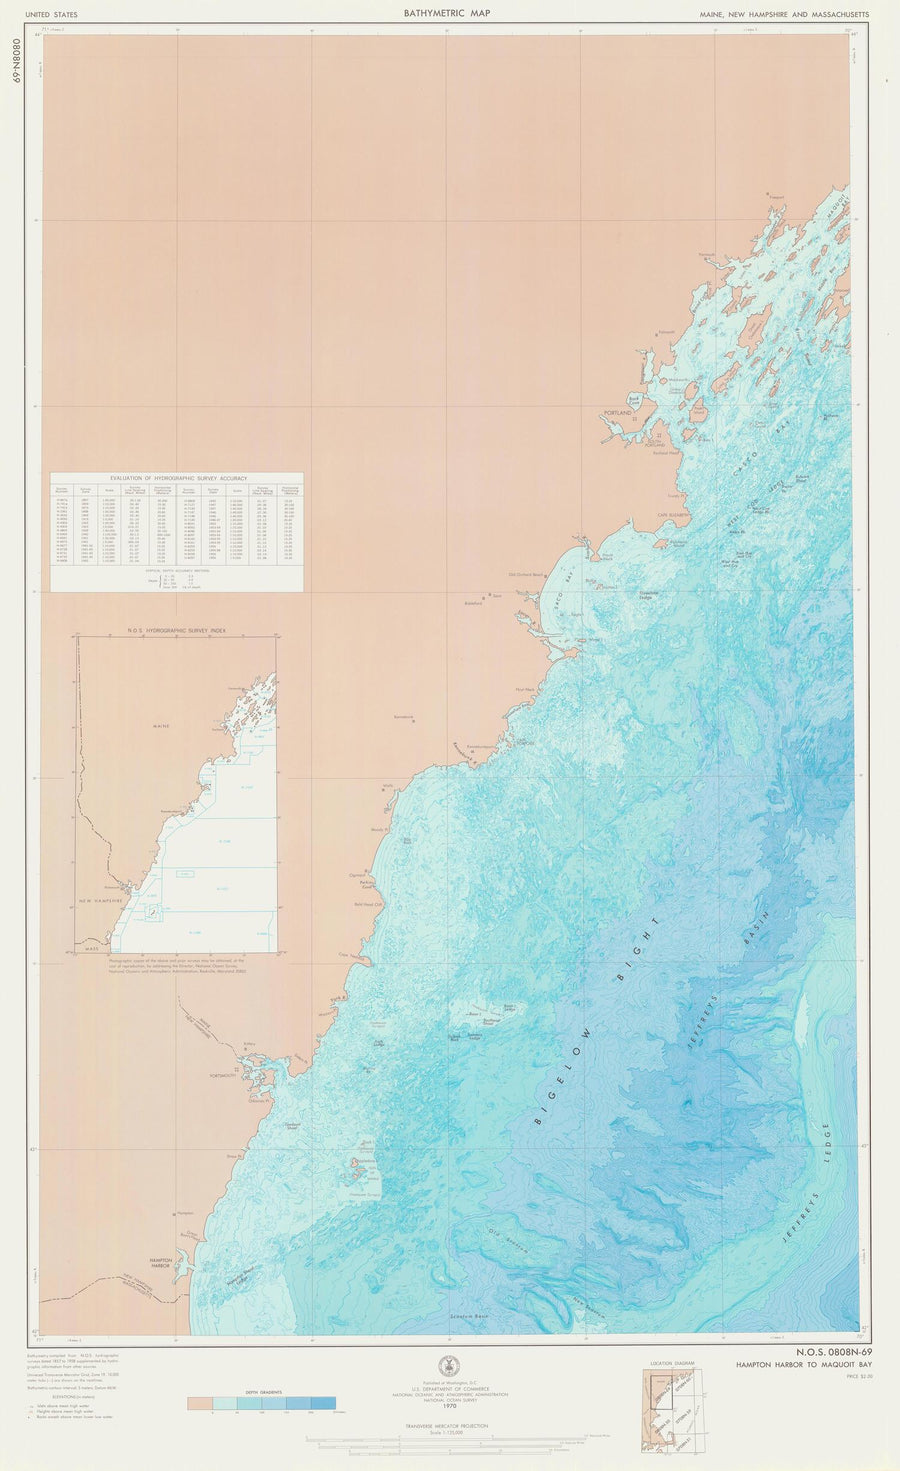 Hampton Harbor to Casco Bay Bathymetric Fishing Map - 1970